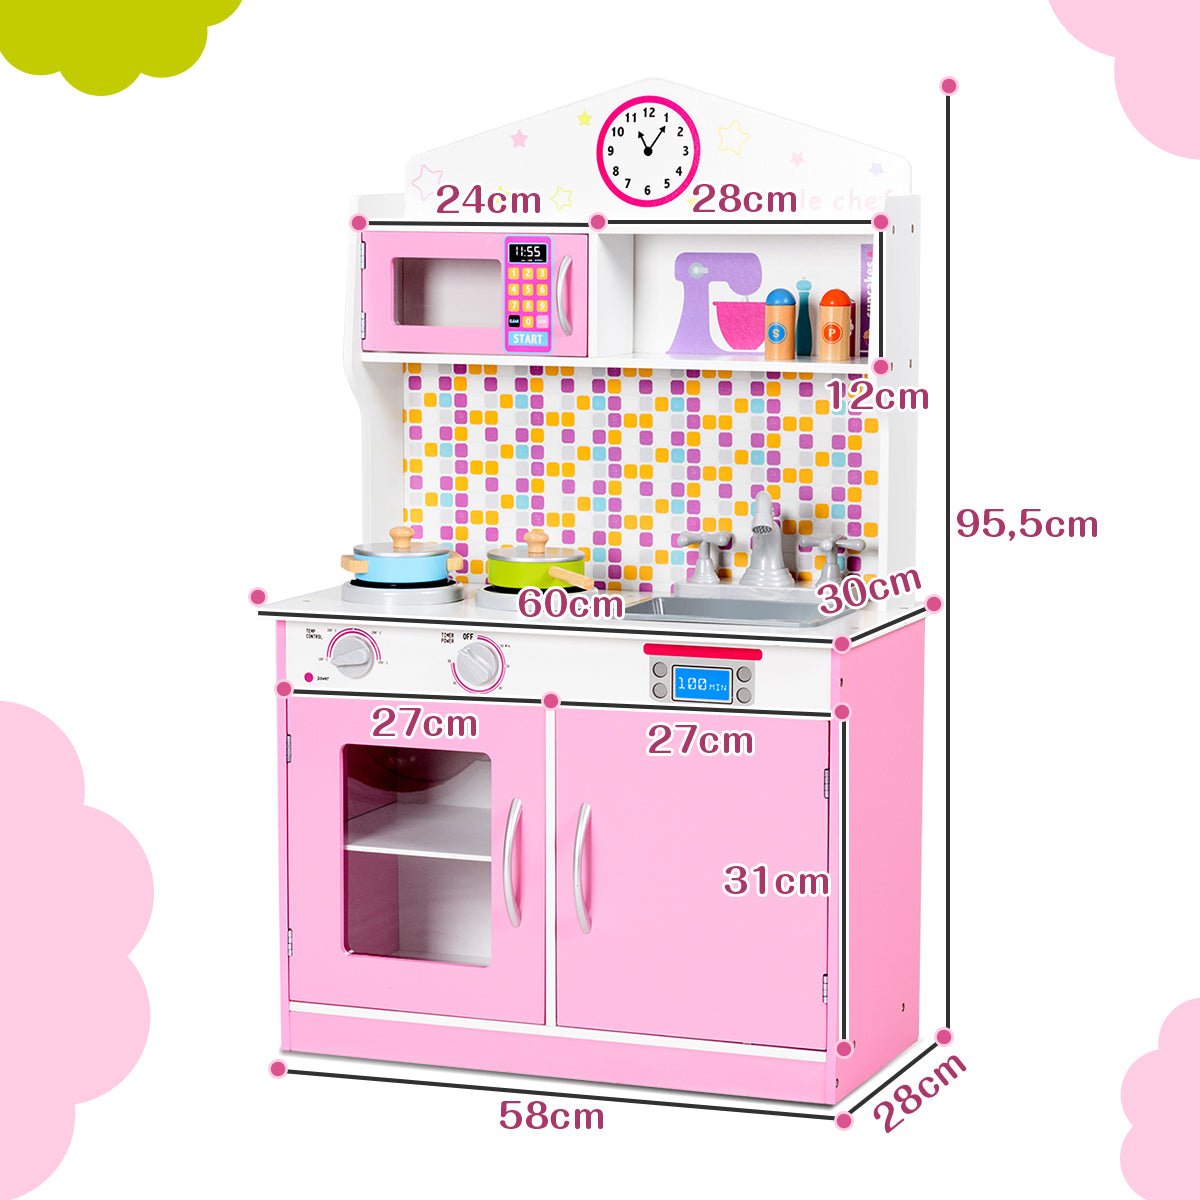 Buy the Pink Toy Kitchen Playset at Kids Mega Mart